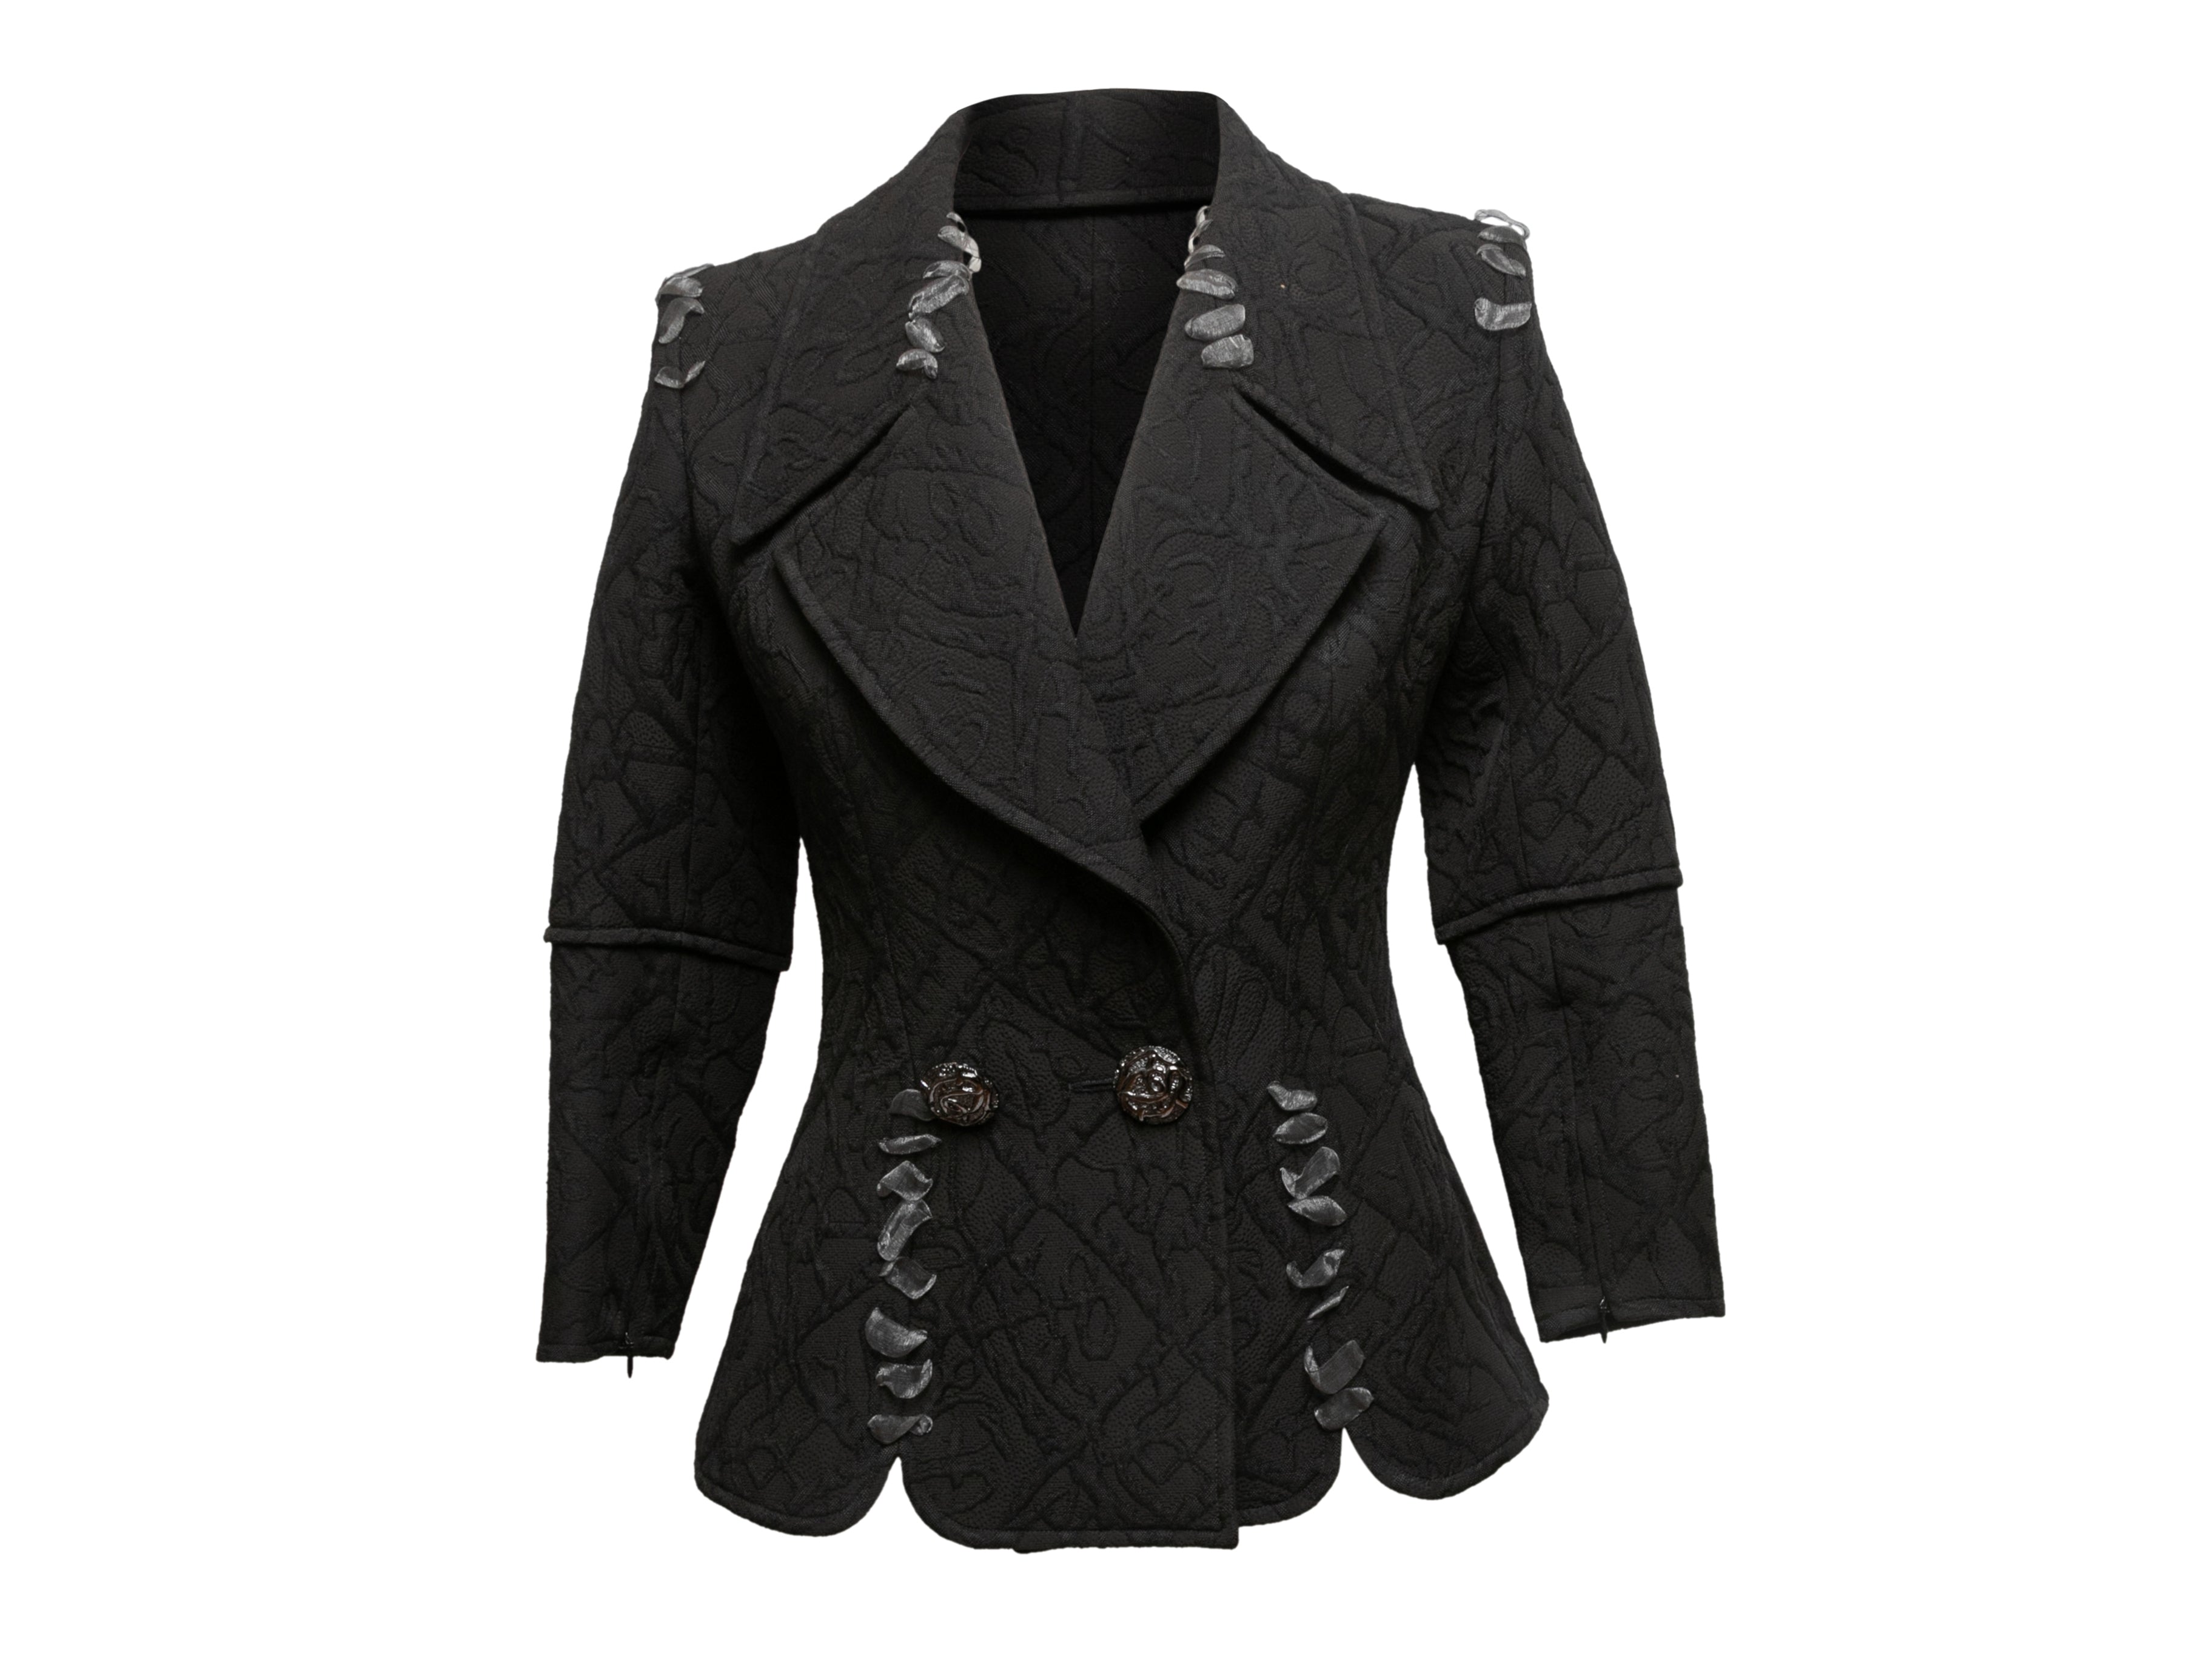 Vintage Black Christian Lacroix 90s Jacquard Blazer Size US S - Designer Revival